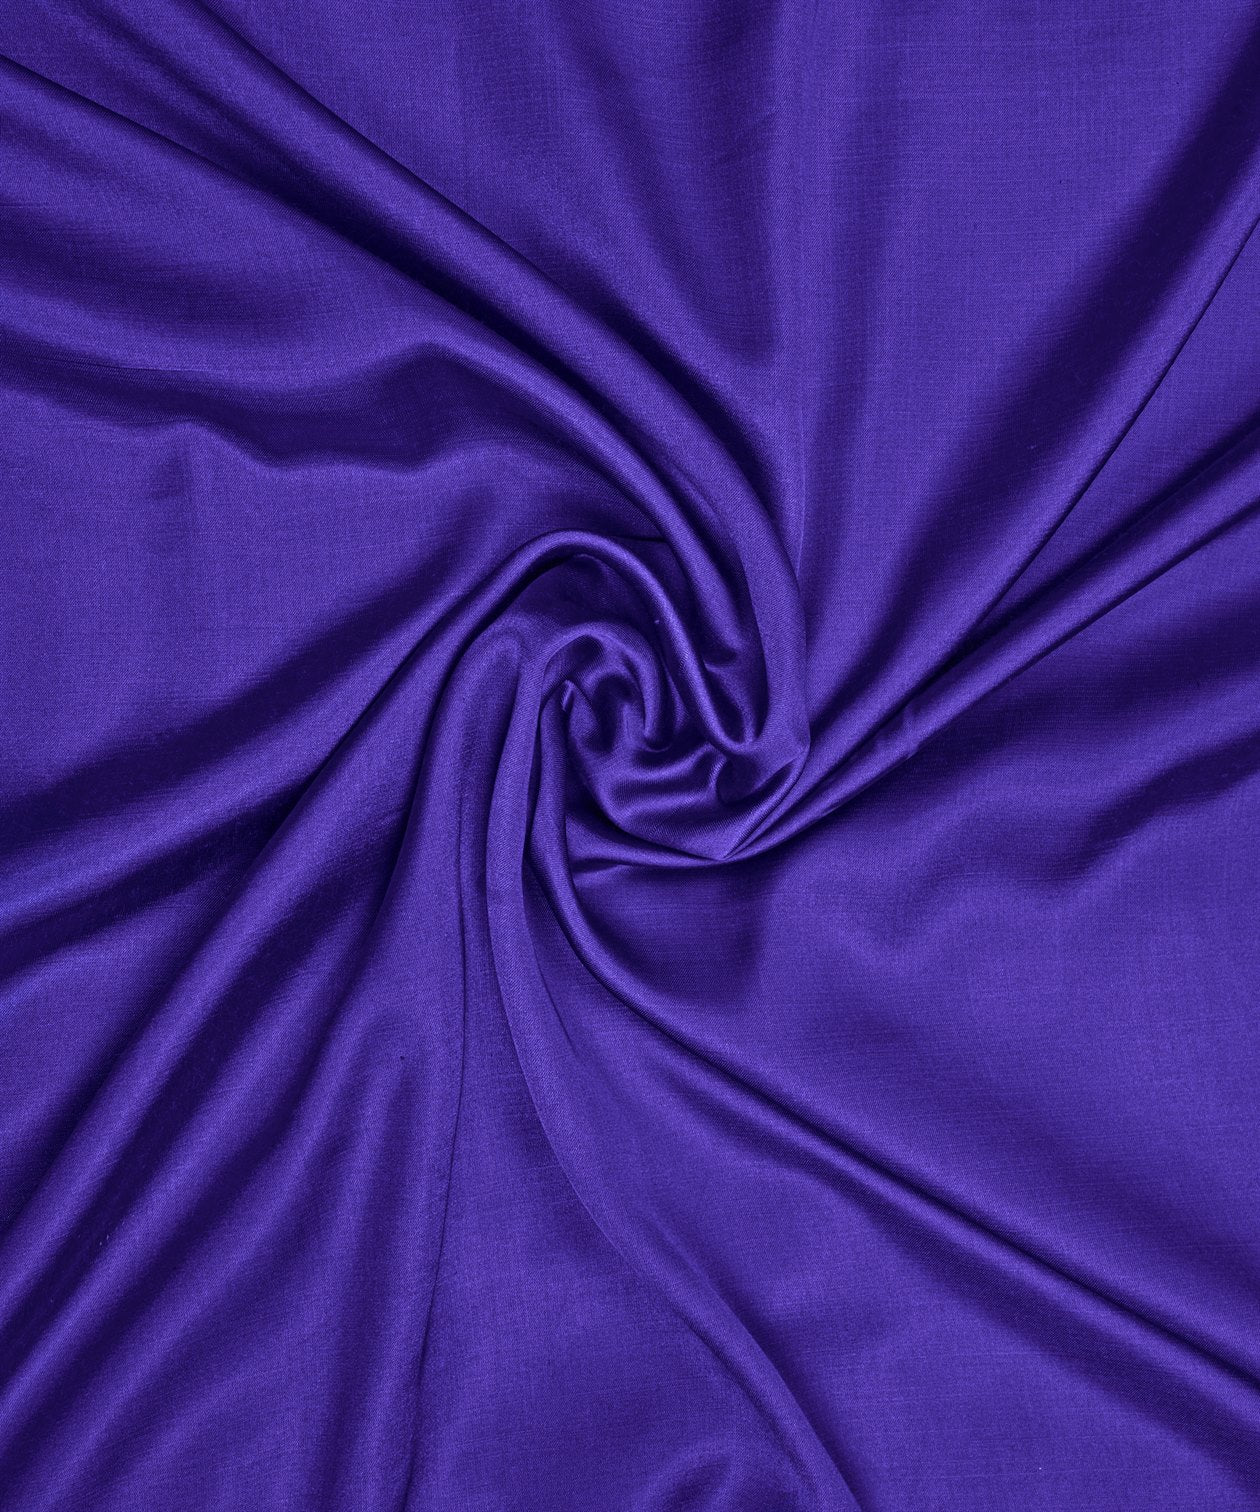 Violet Plain Dyed Modal Satin Fabric